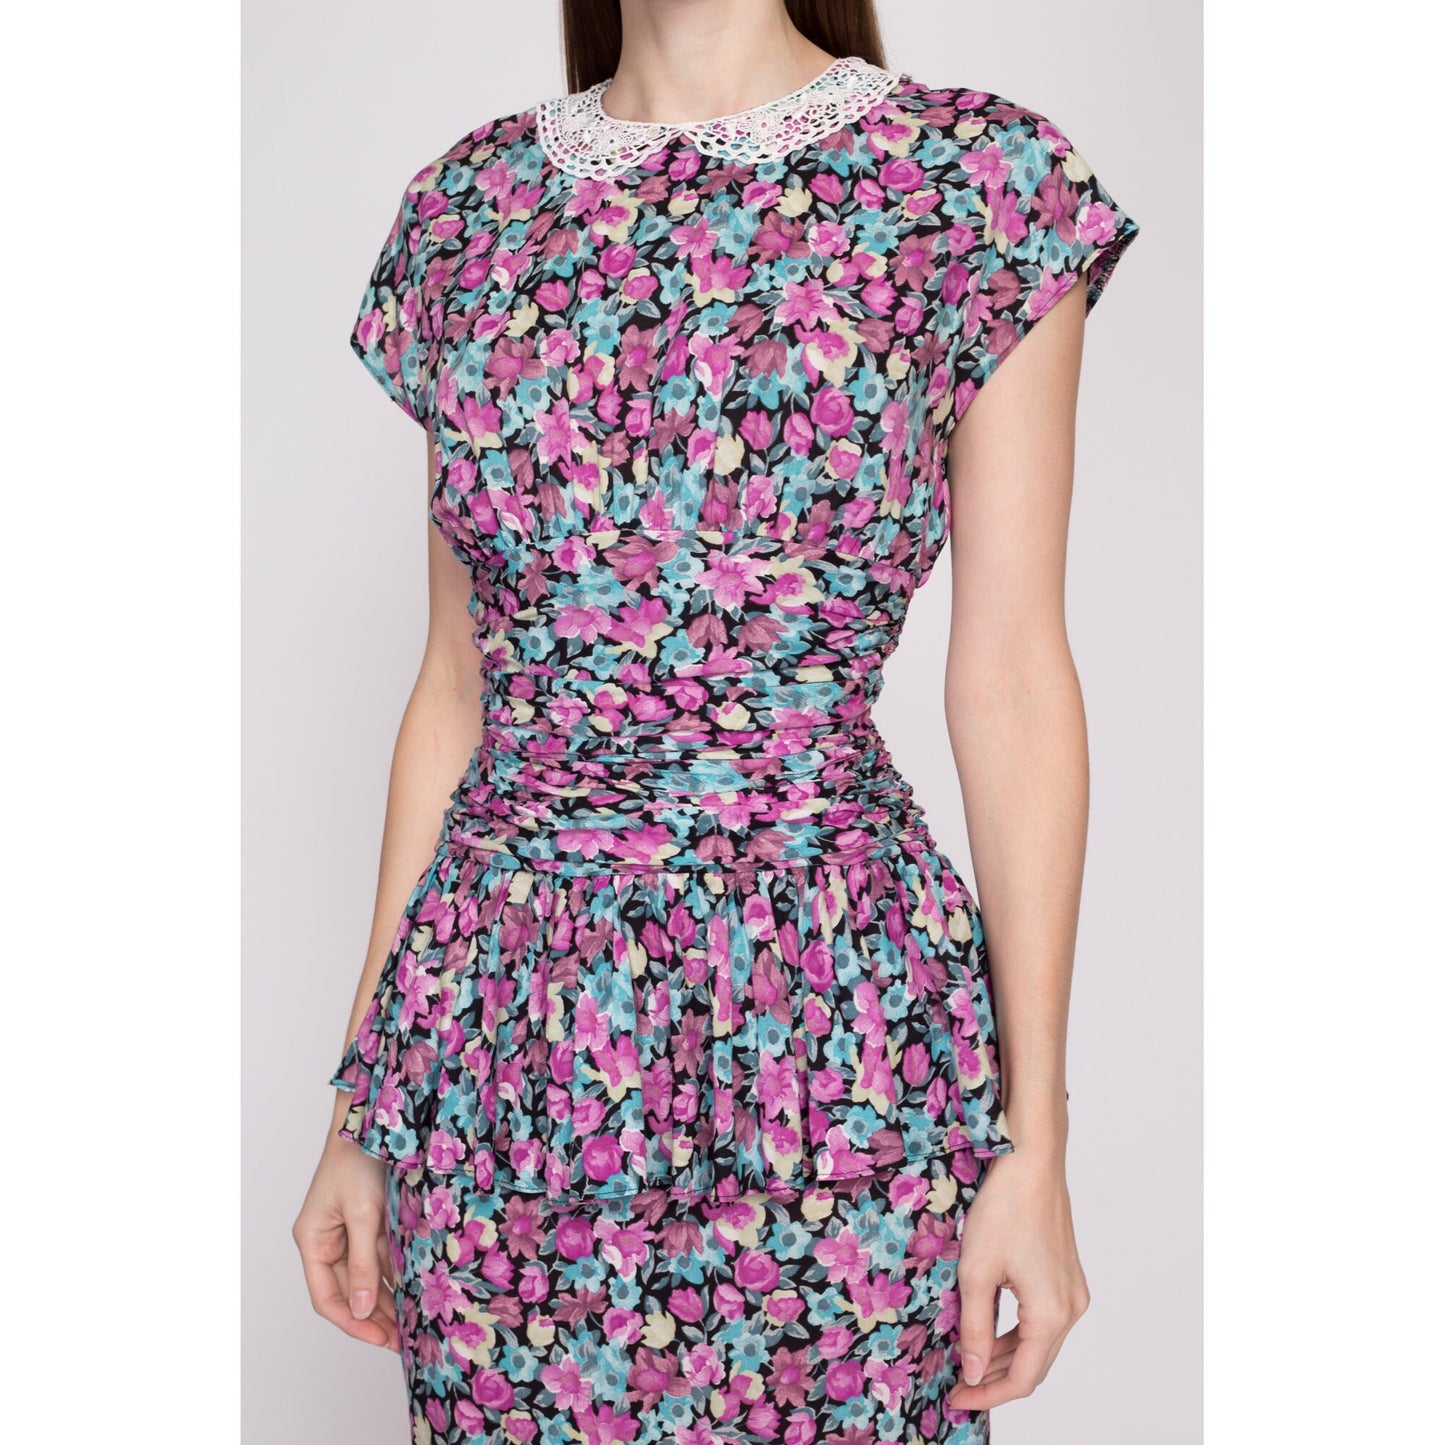 XS 80s Floral Peplum Wiggle Dress | Vintage Lace Peter Pan Collar Retro Knee Length Secretary Dress